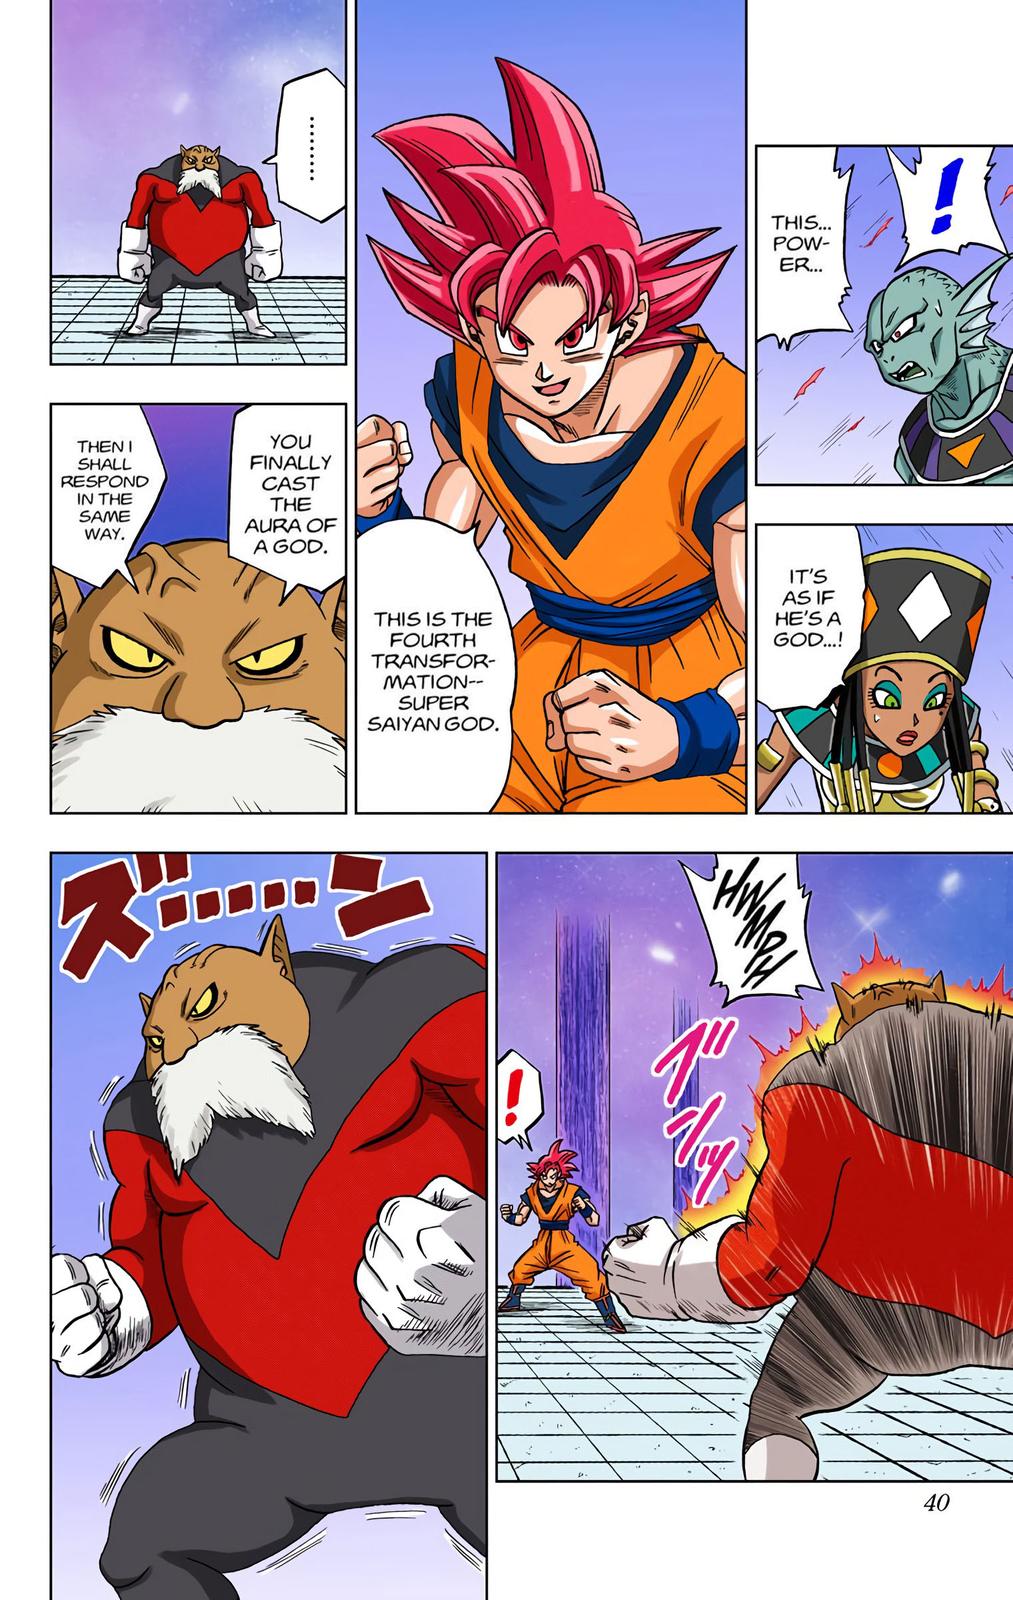 Dragon Ball Super Manga Manga Chapter - 29 - image 39